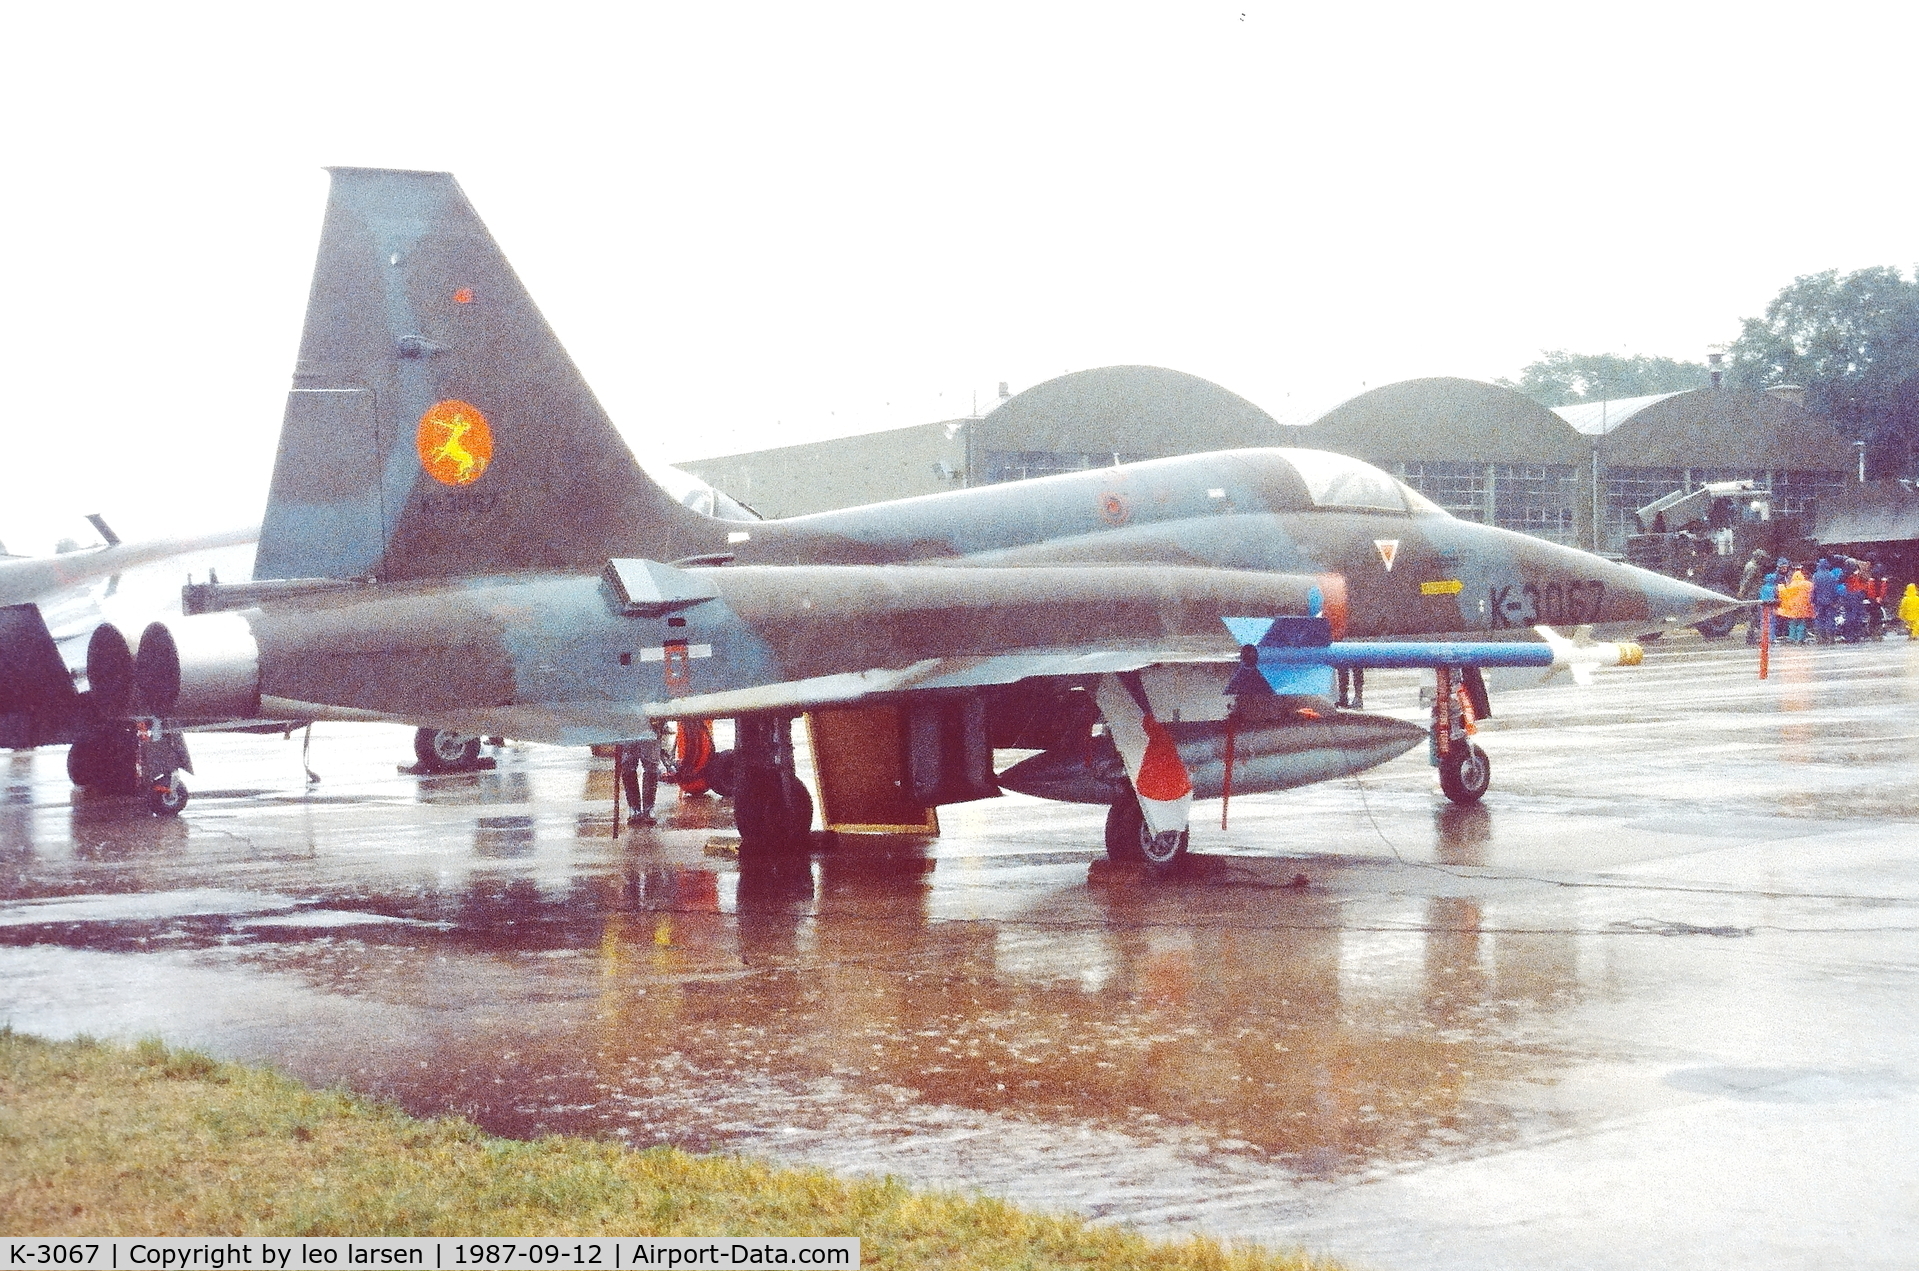 K-3067, 1971 Canadair NF-5A Freedom Fighter C/N 3067, Vaerloese Air Base Denmark 12.9.1987 in rain